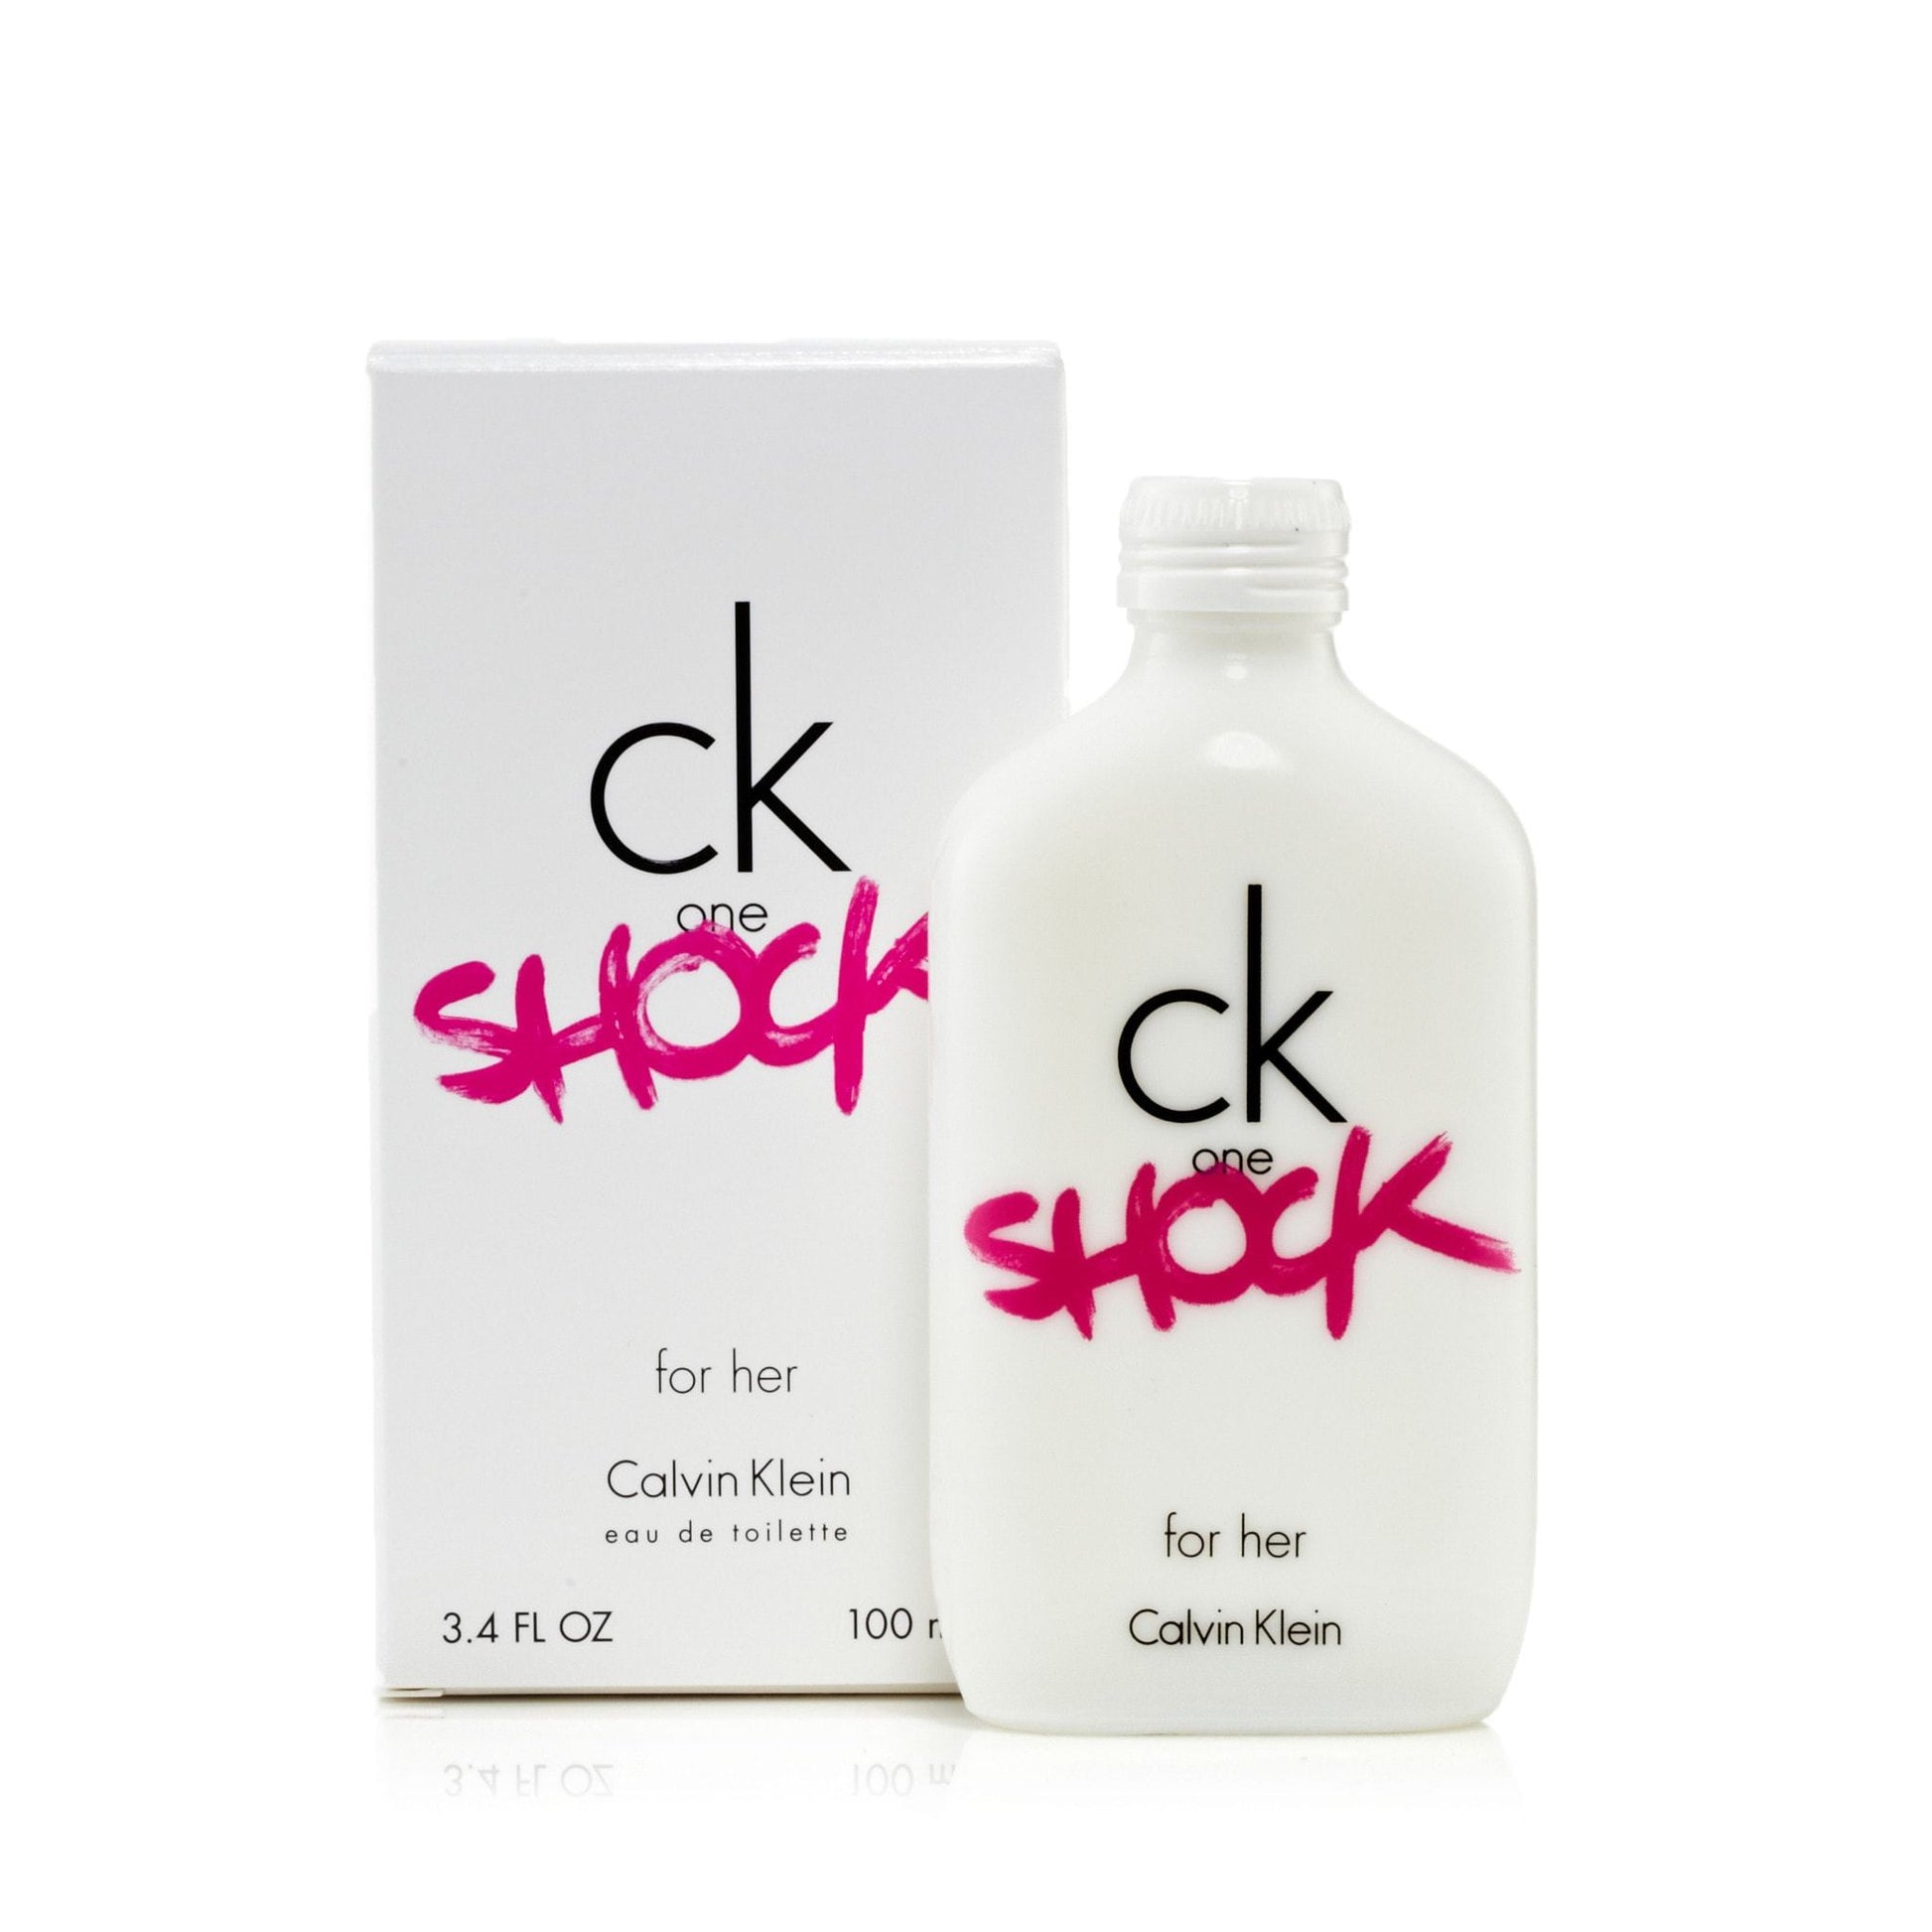 CK One Shock Eau de Toilette Spray for Women by Calvin Klein, Product image 3